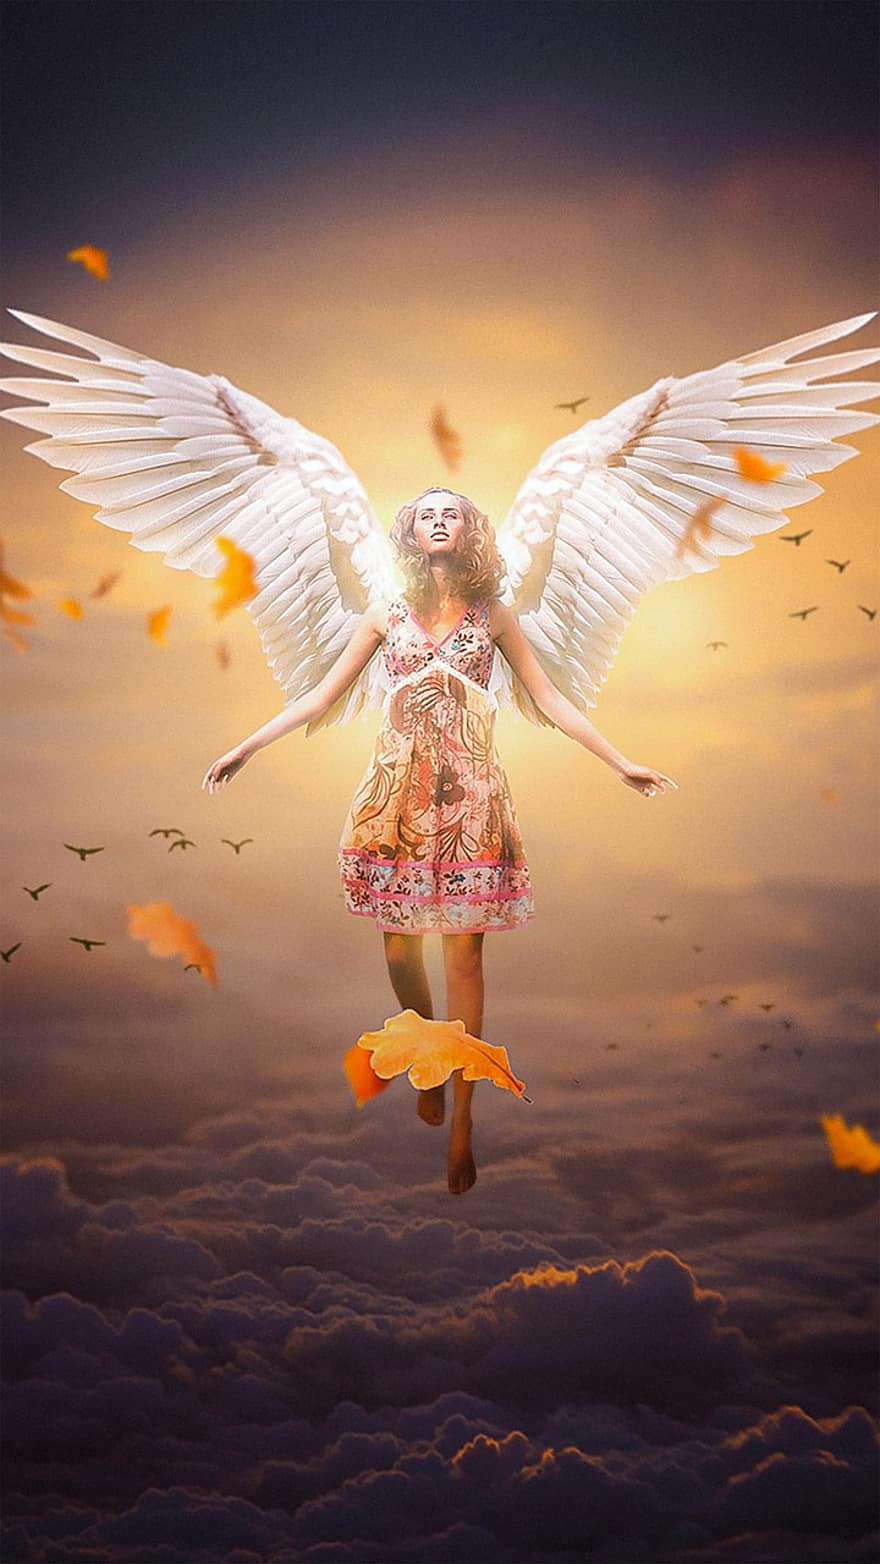 Angel, Female, Wings, Woman, Angel Wings, Fantasy, Female Angel, Dream, Sky, Girl, Photomontage